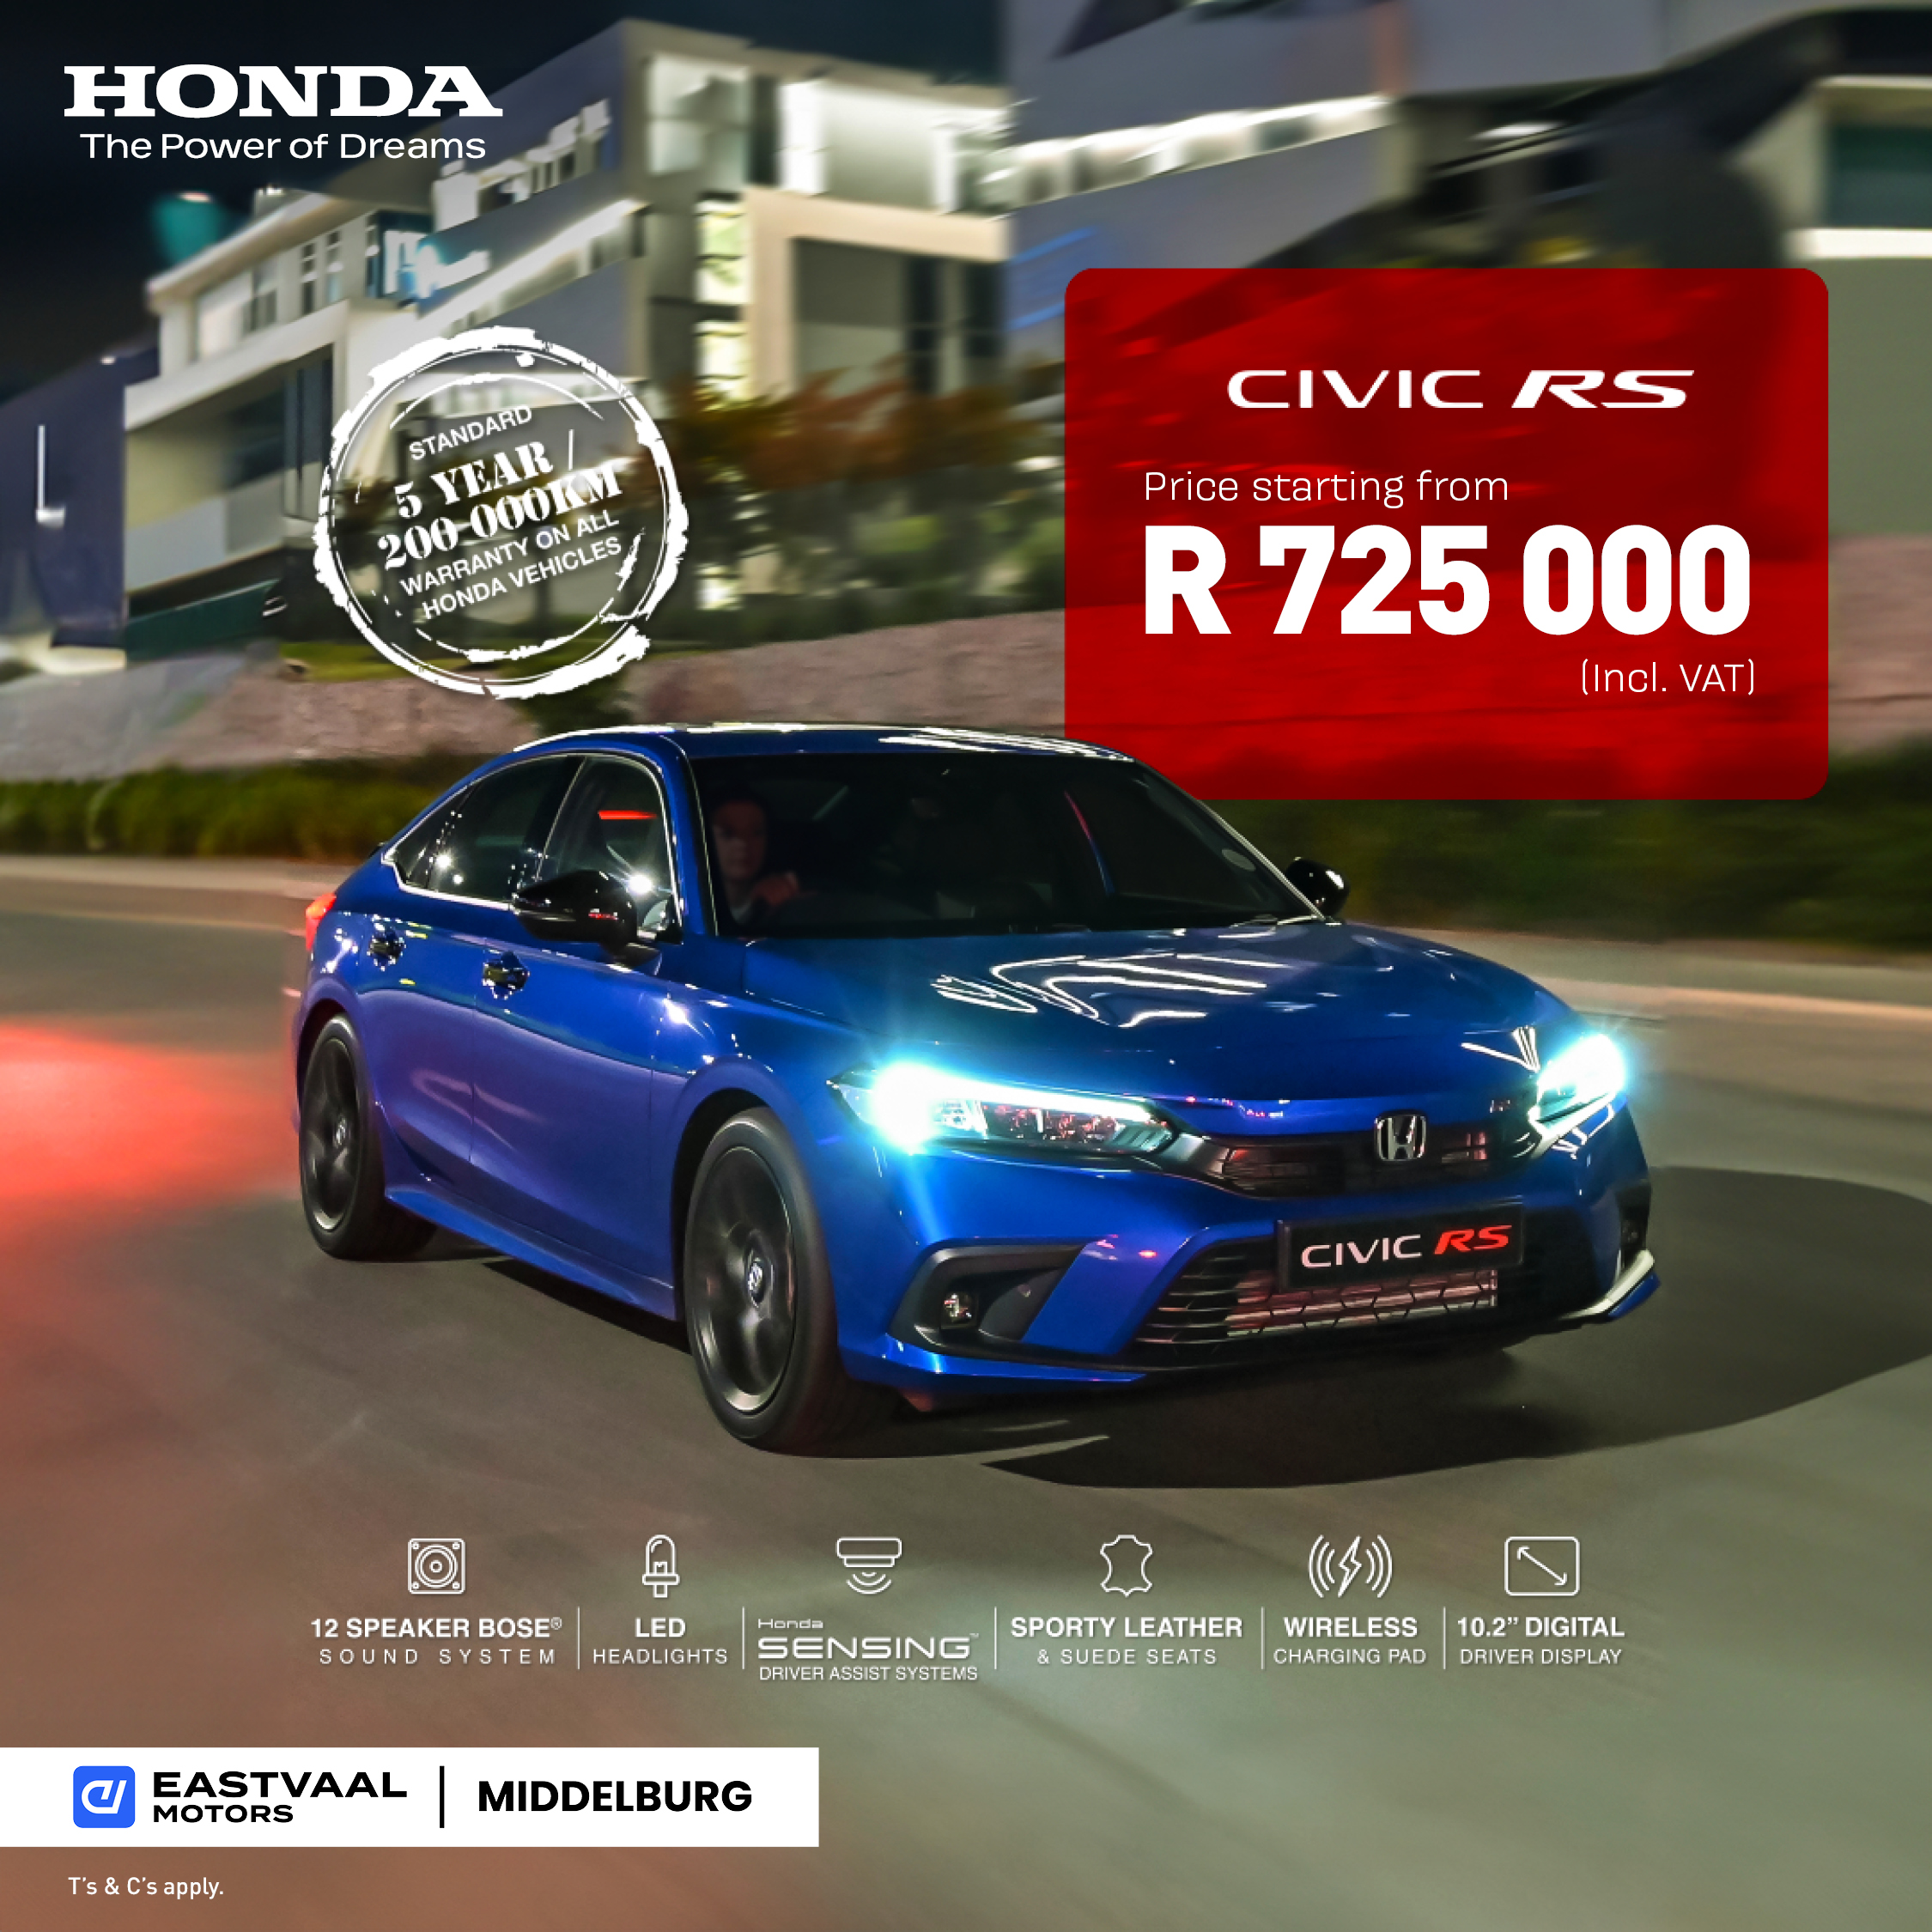 Honda Civic RS image from 